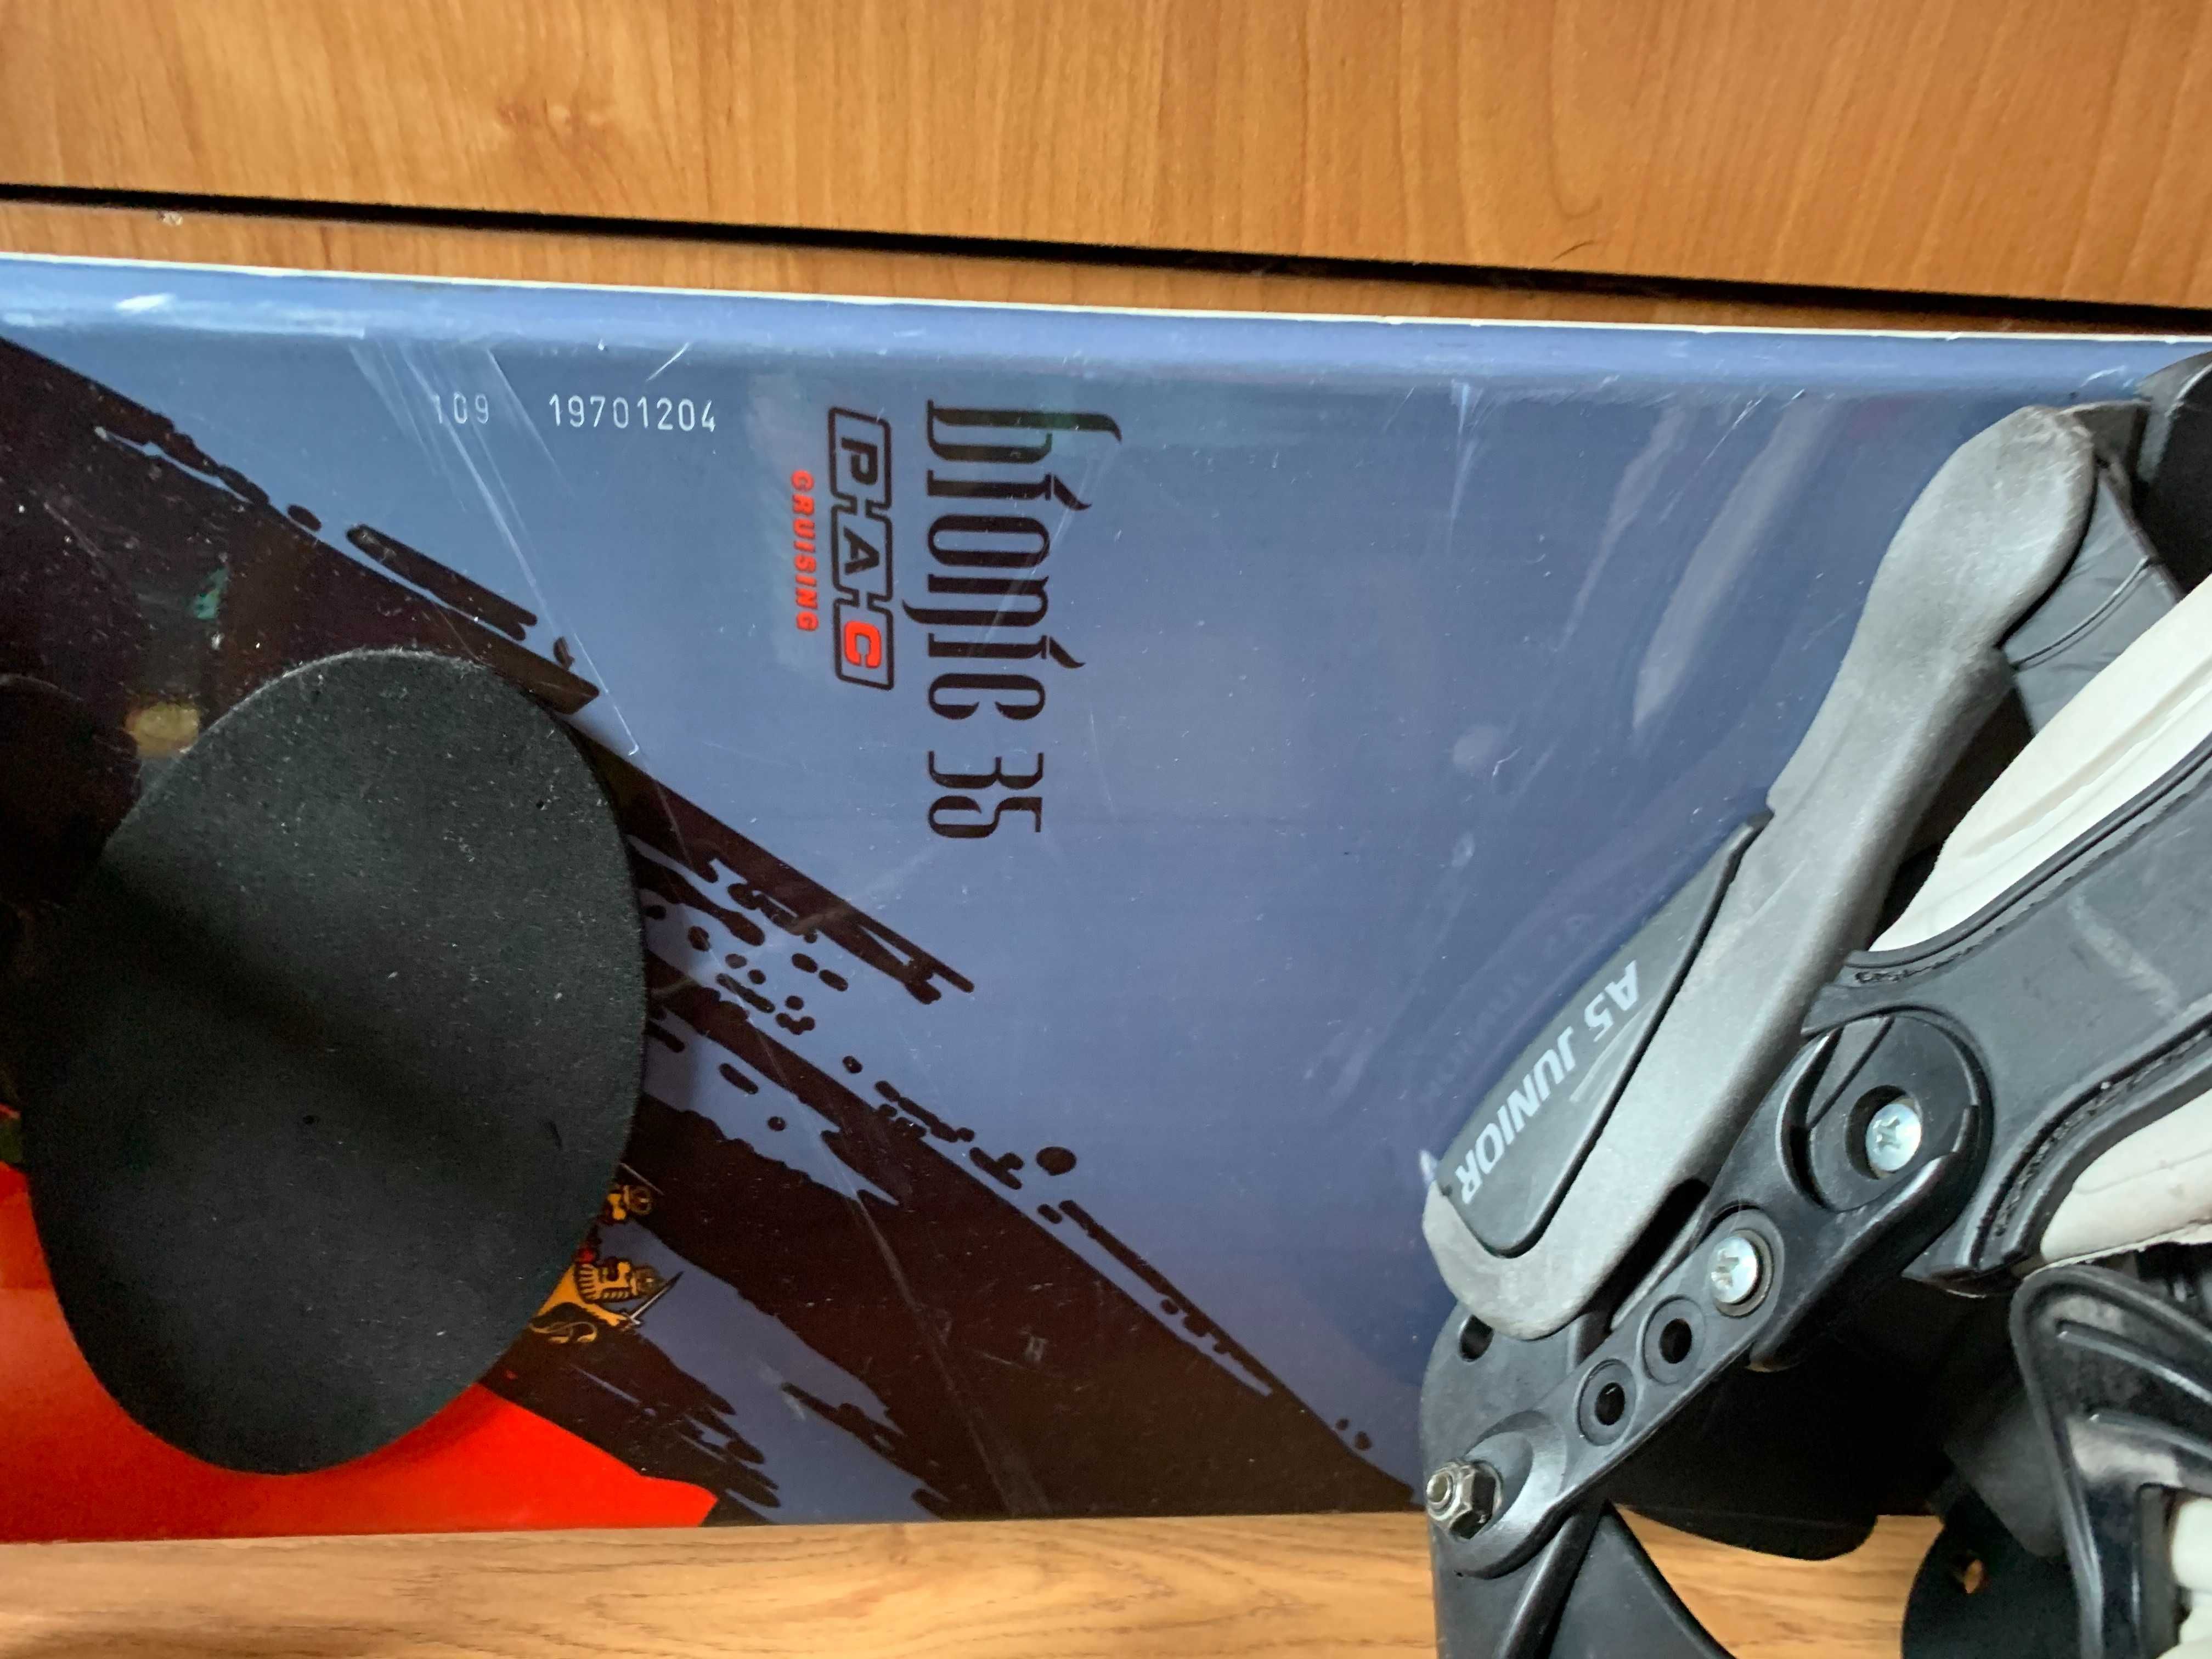 Deska snowboardowa bionic 35